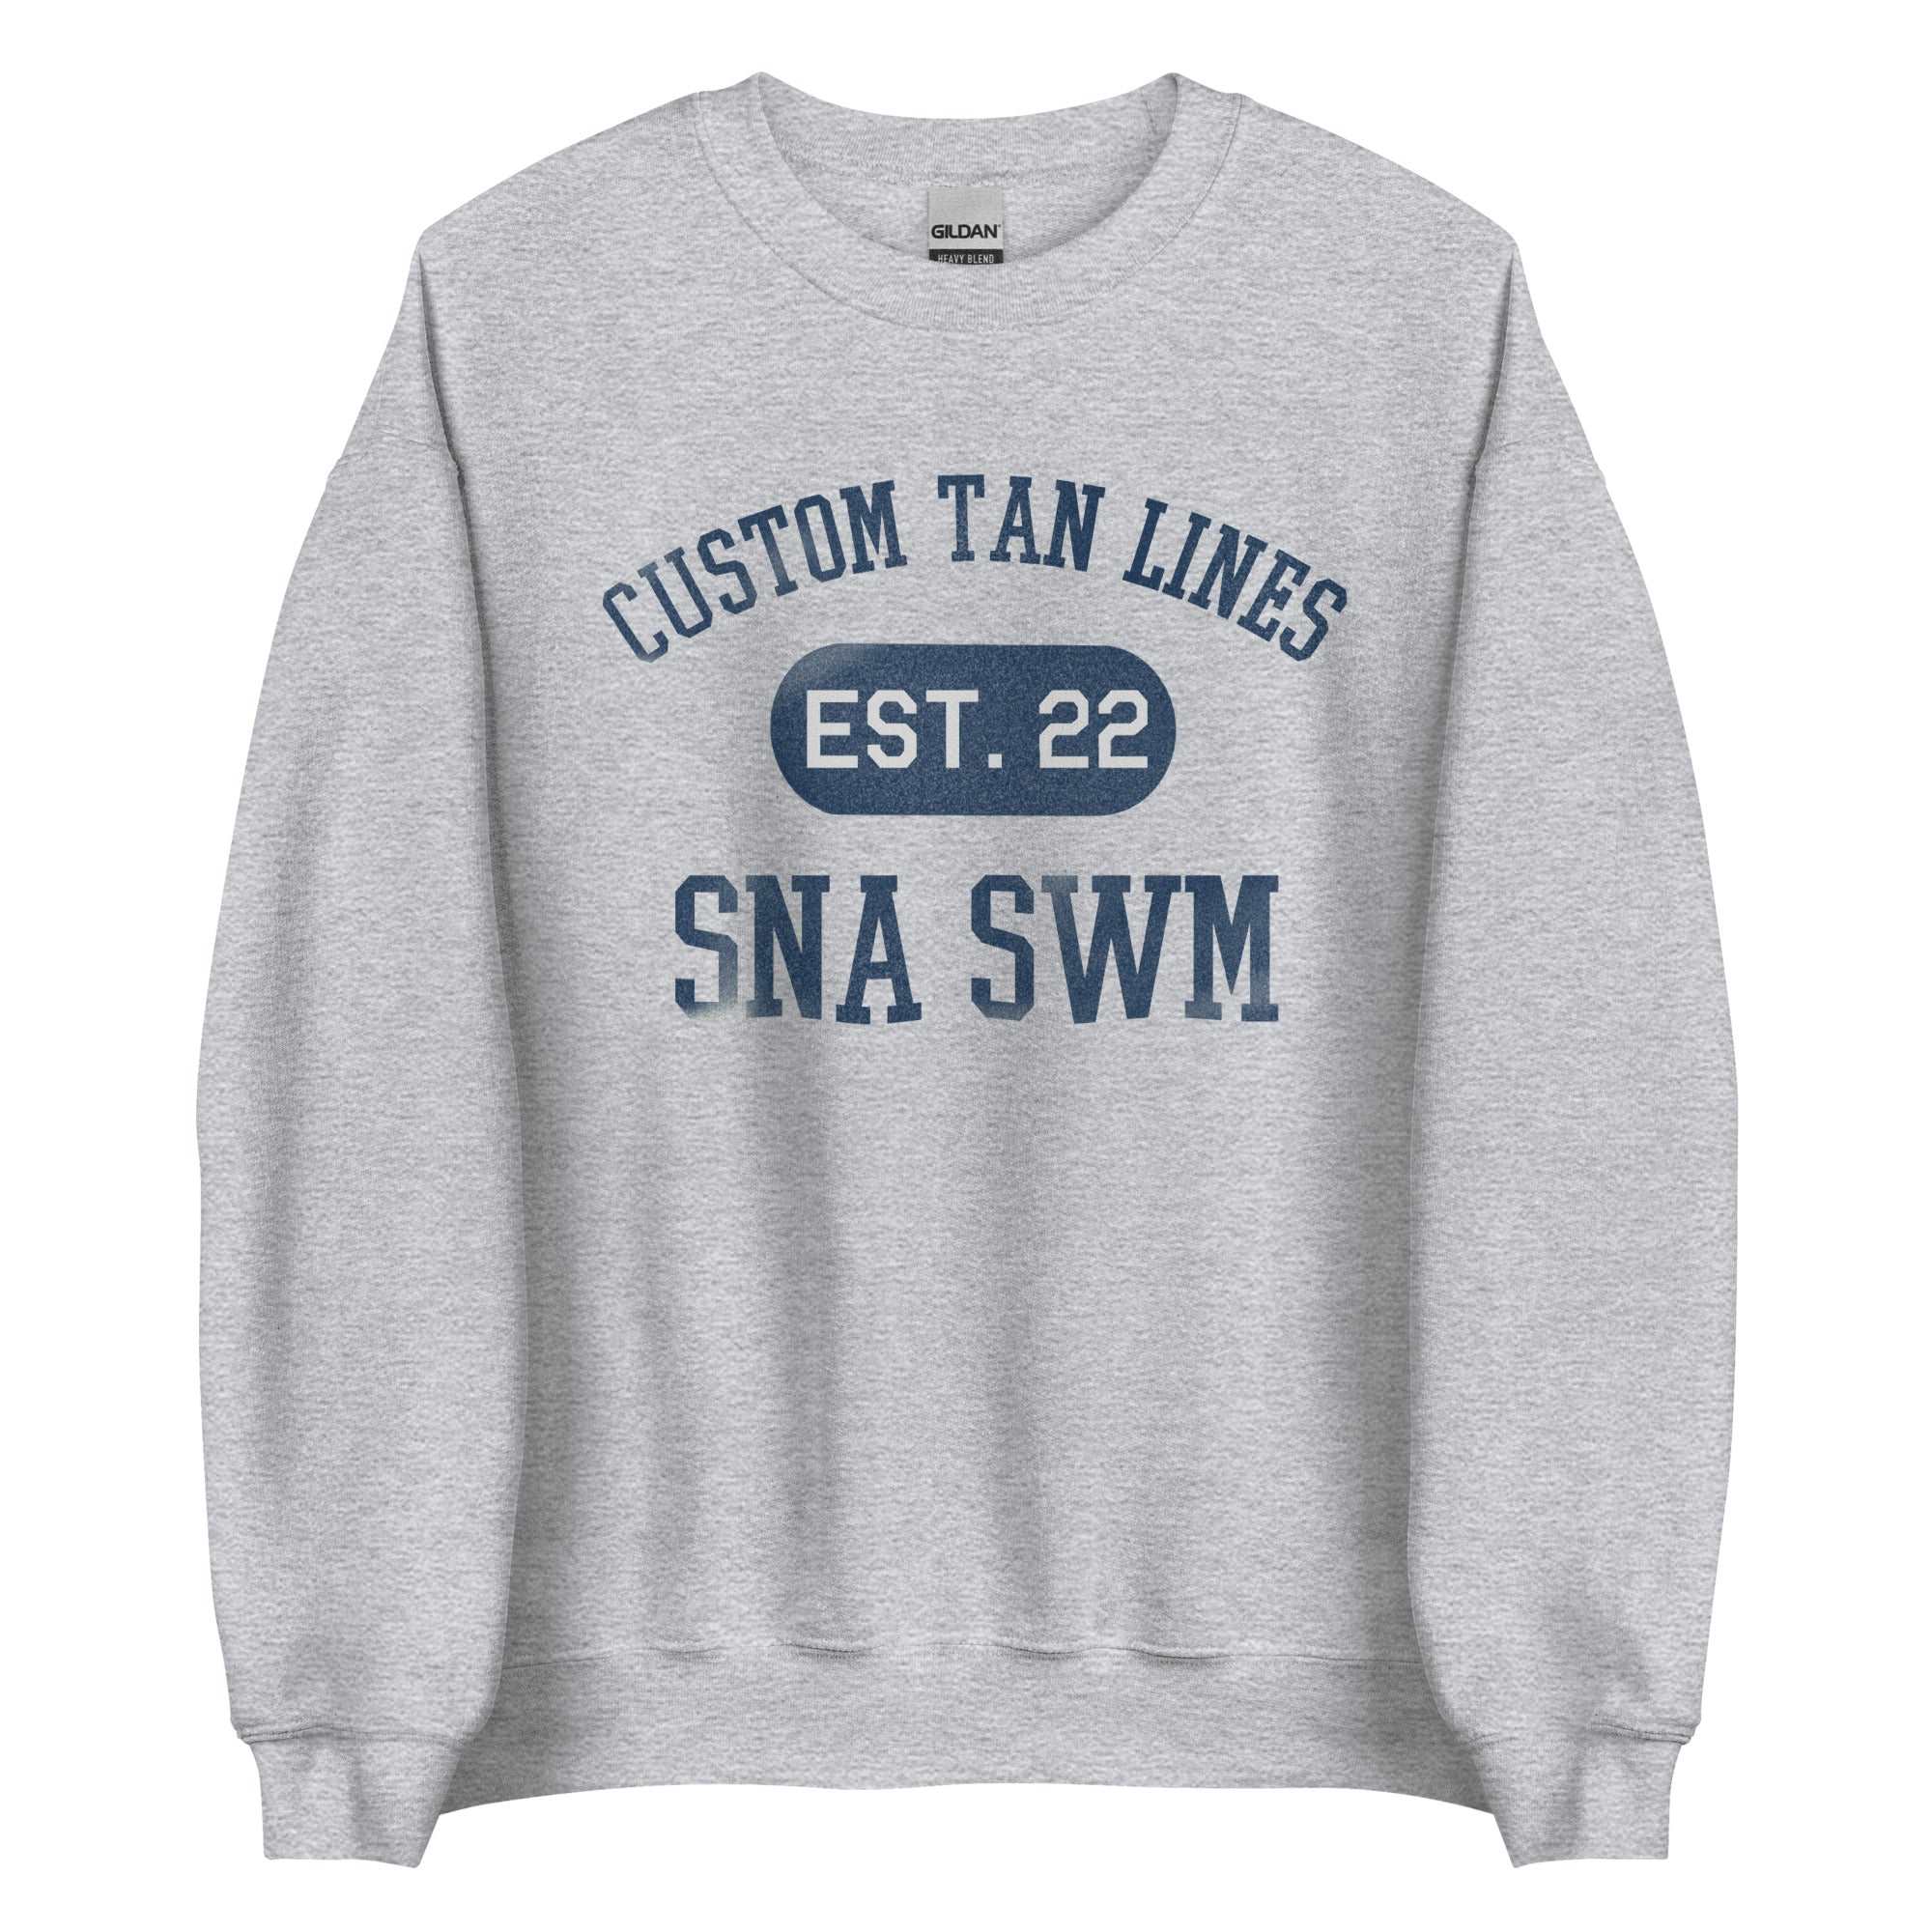 Outerwear: &quot;Custom Tan Lines” oversized sweatshirt